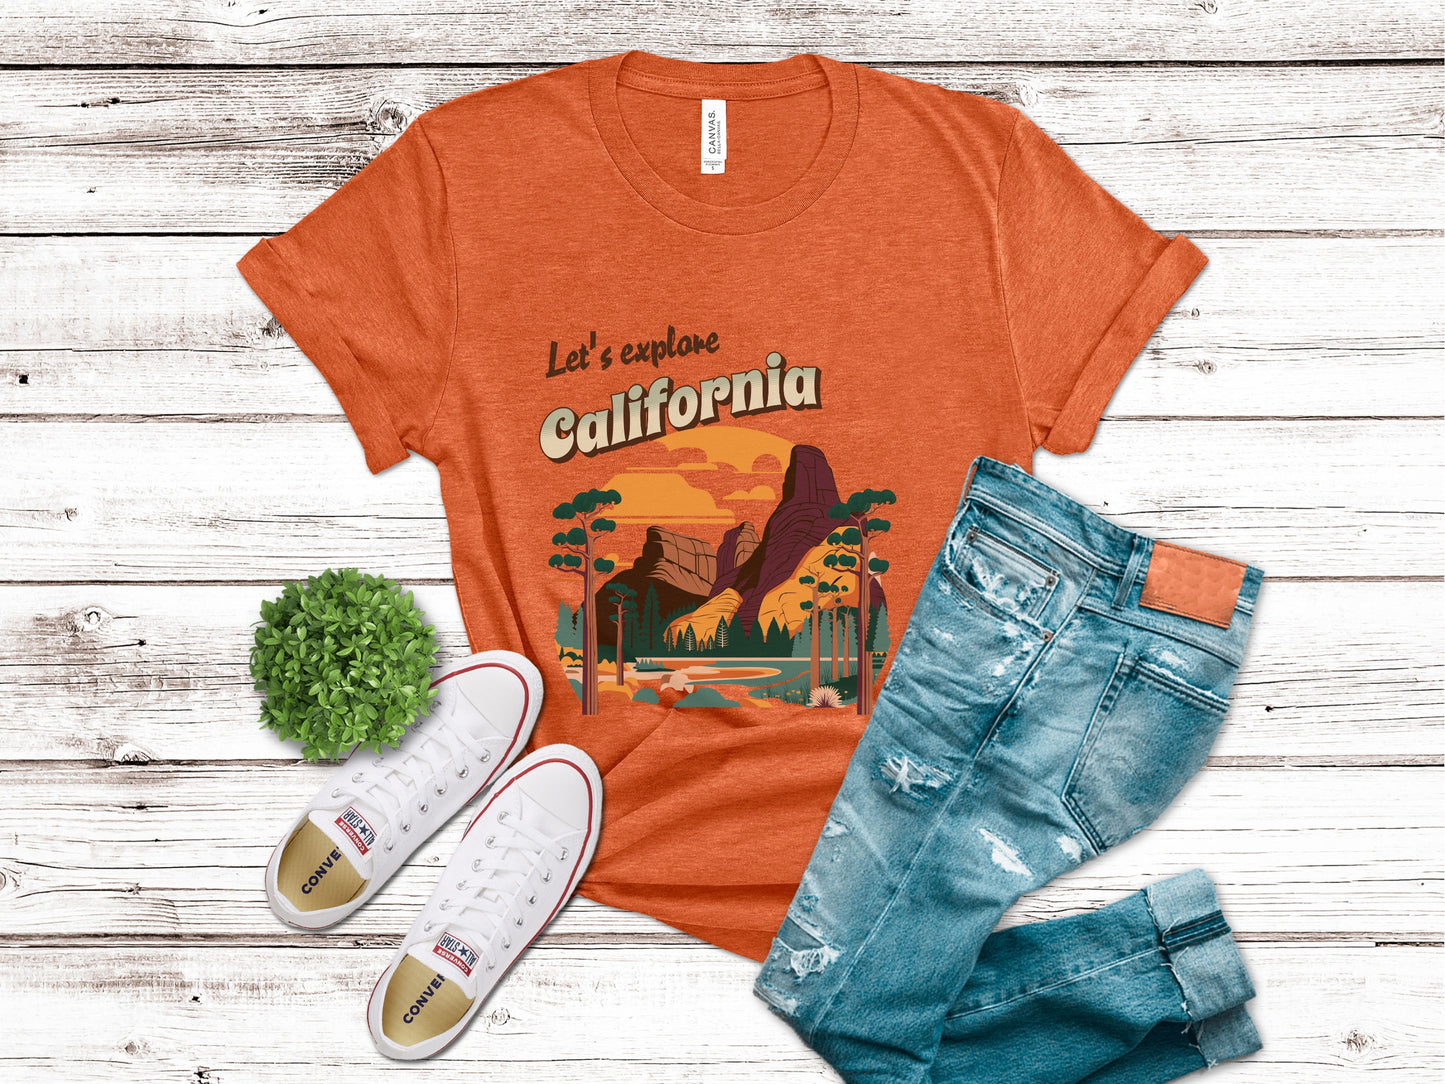 EXPLORING CALIFORNIA